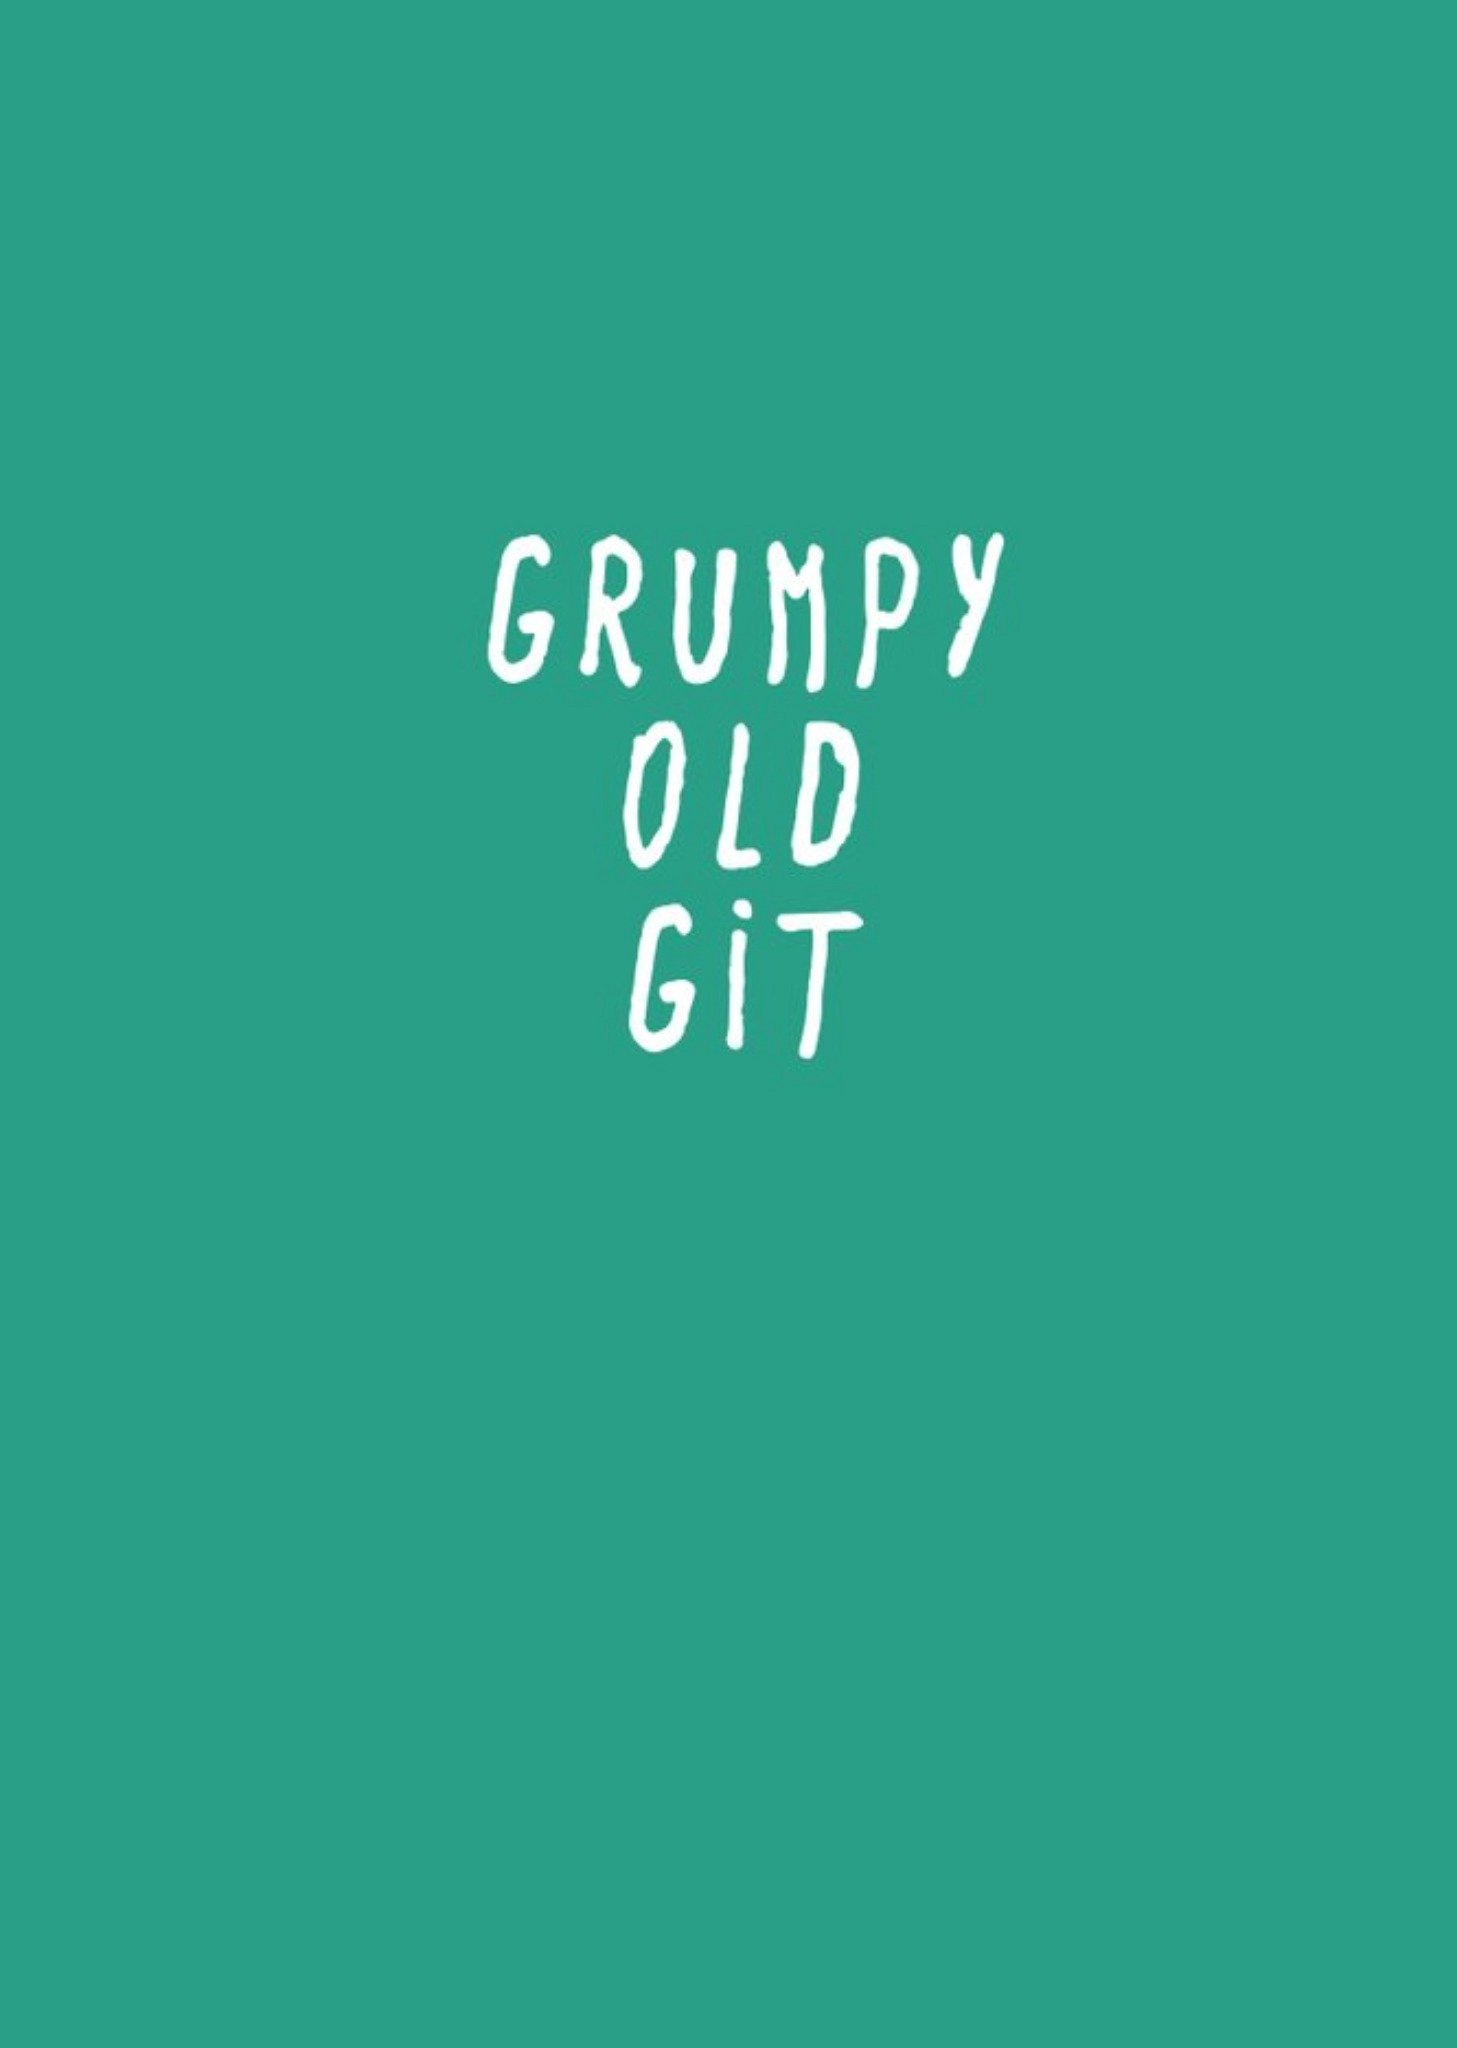 Moonpig Funny Typographical Grumpy Old Git Card Ecard